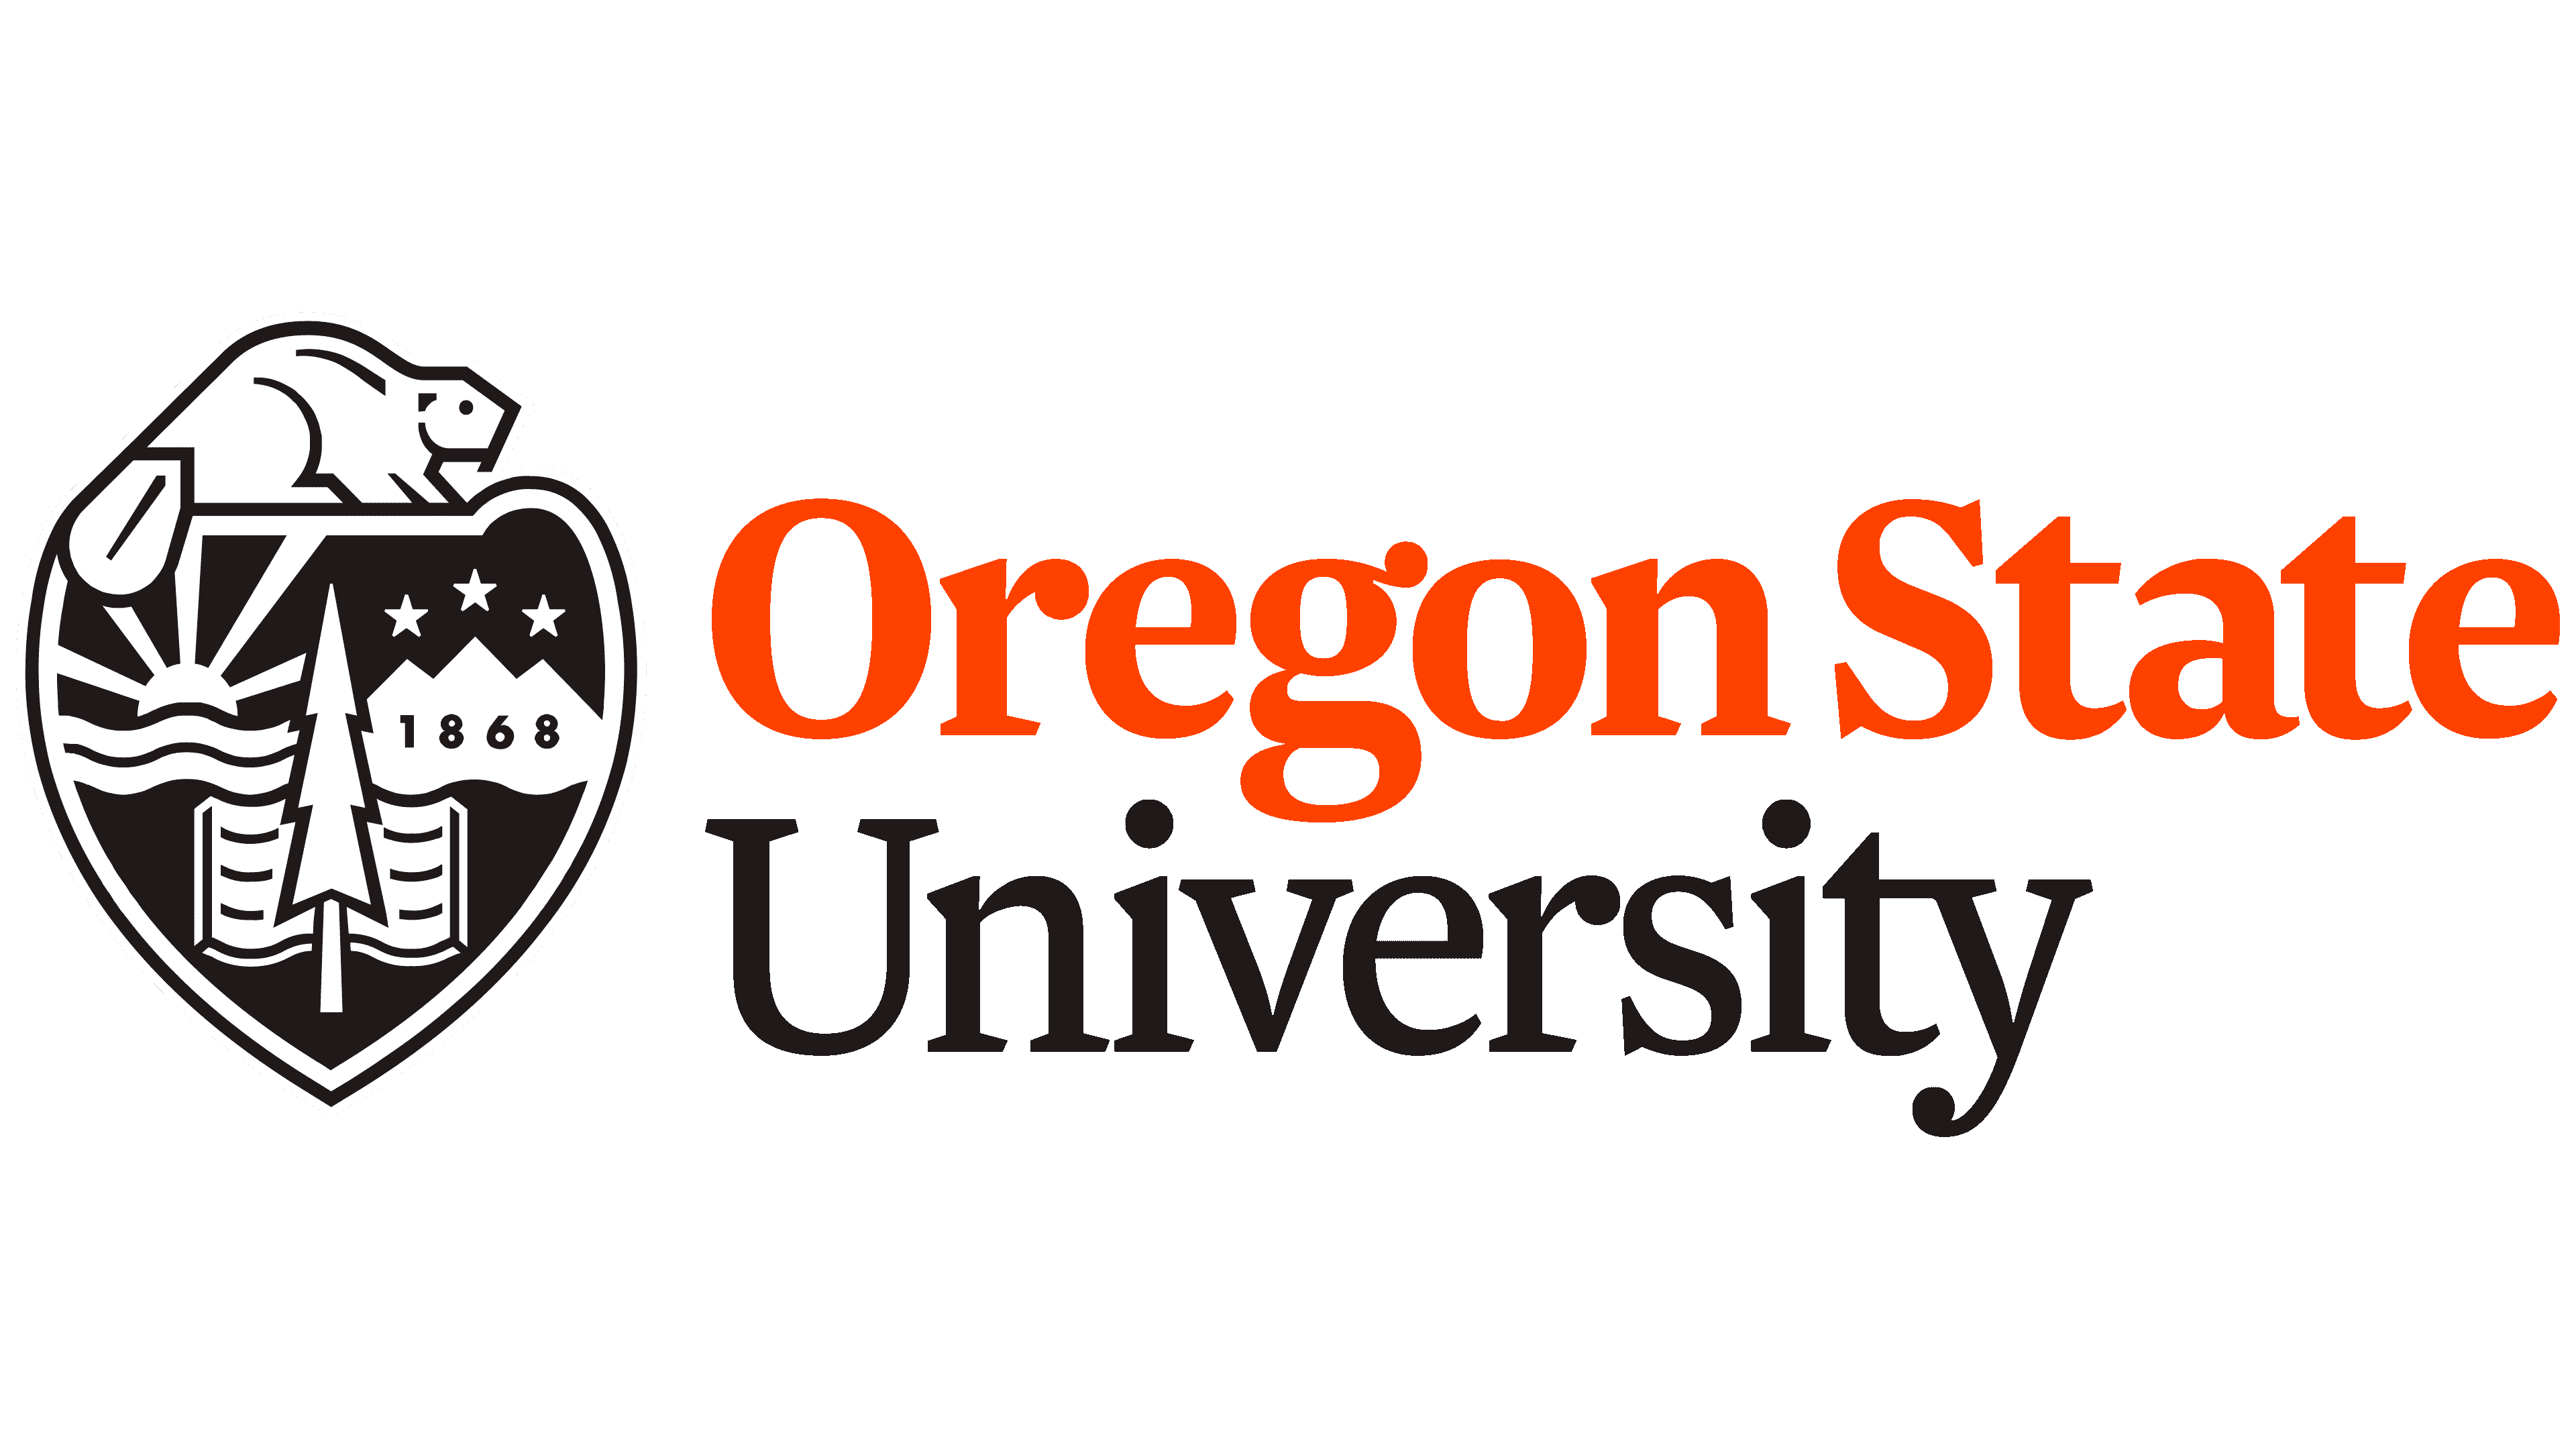 Oregon State University Transparent PNG Logo